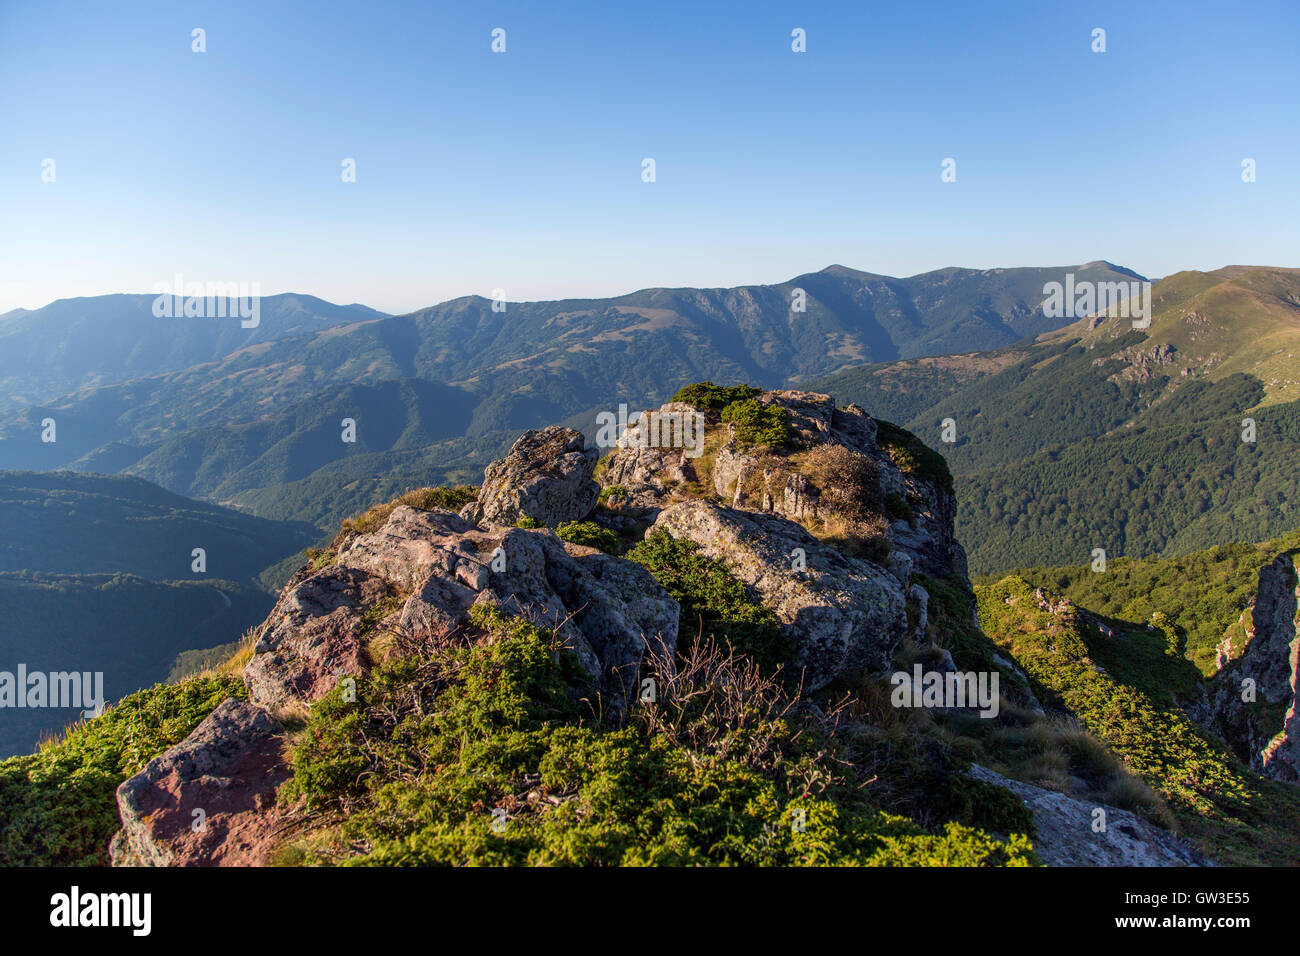 Detail of the Stara planina mountain in Serbia Stock Photo